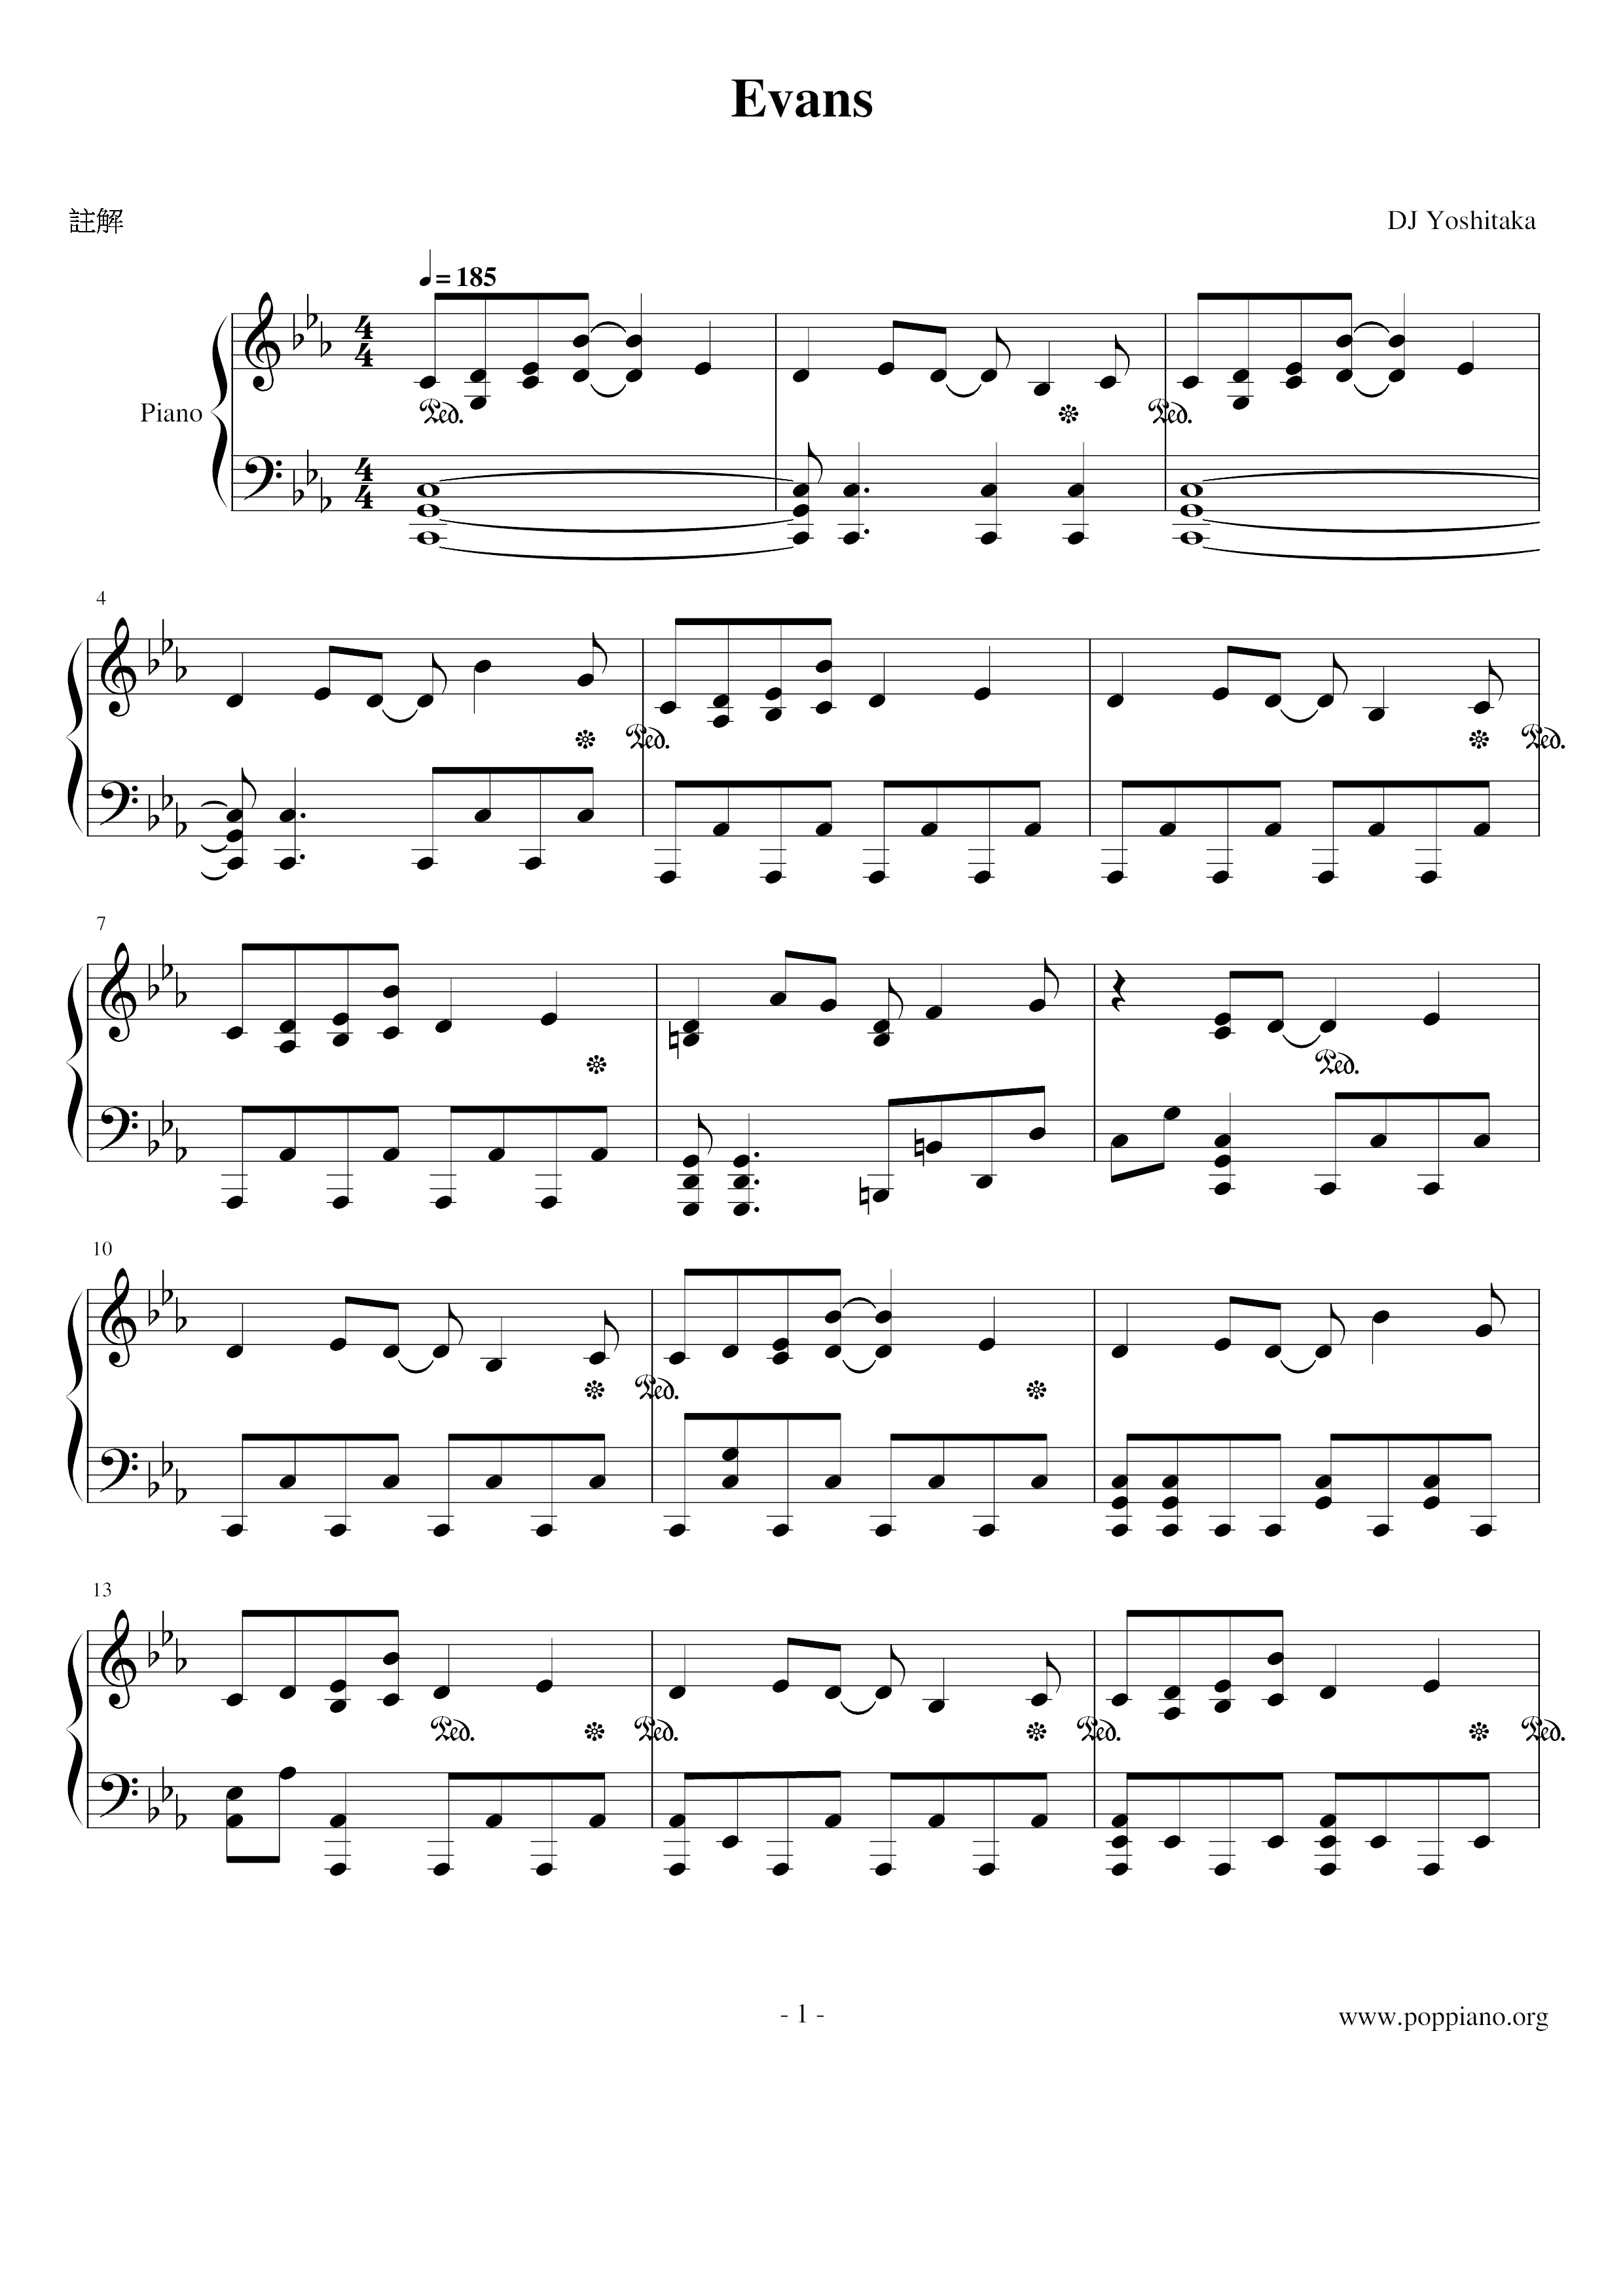 [Jubeat] Evans Score